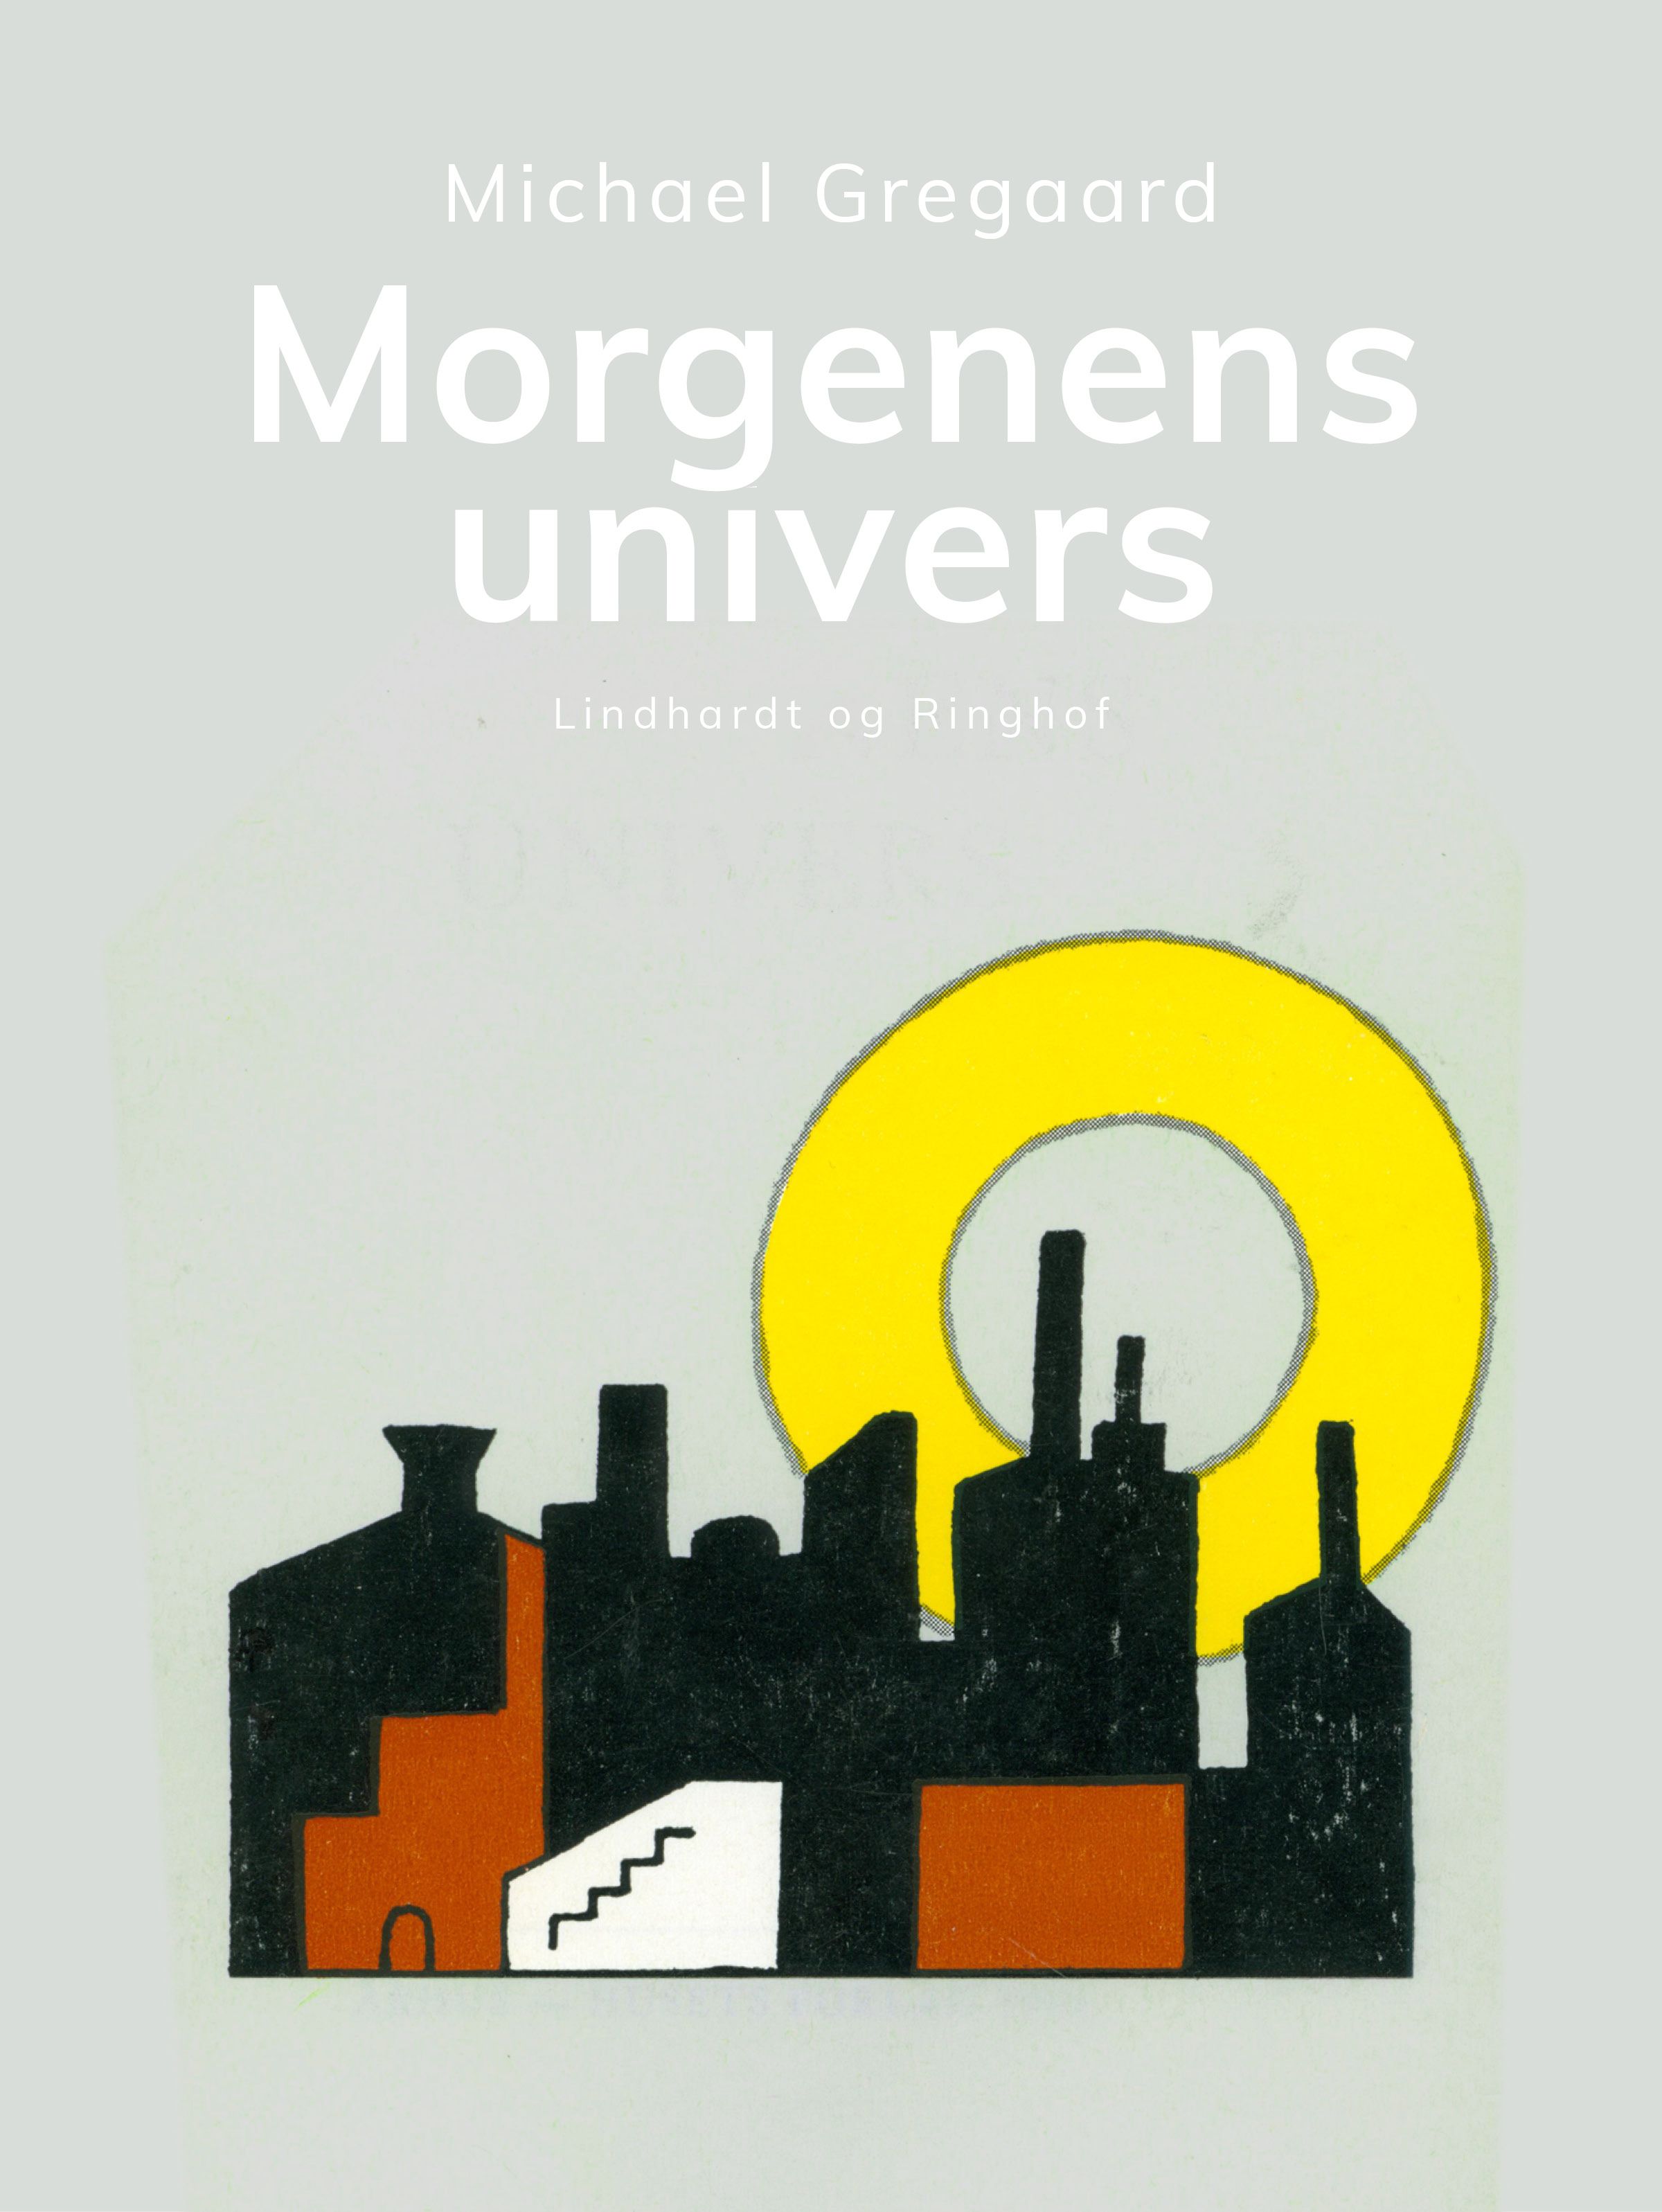 Morgenens univers, eBook by Michael Gregaard